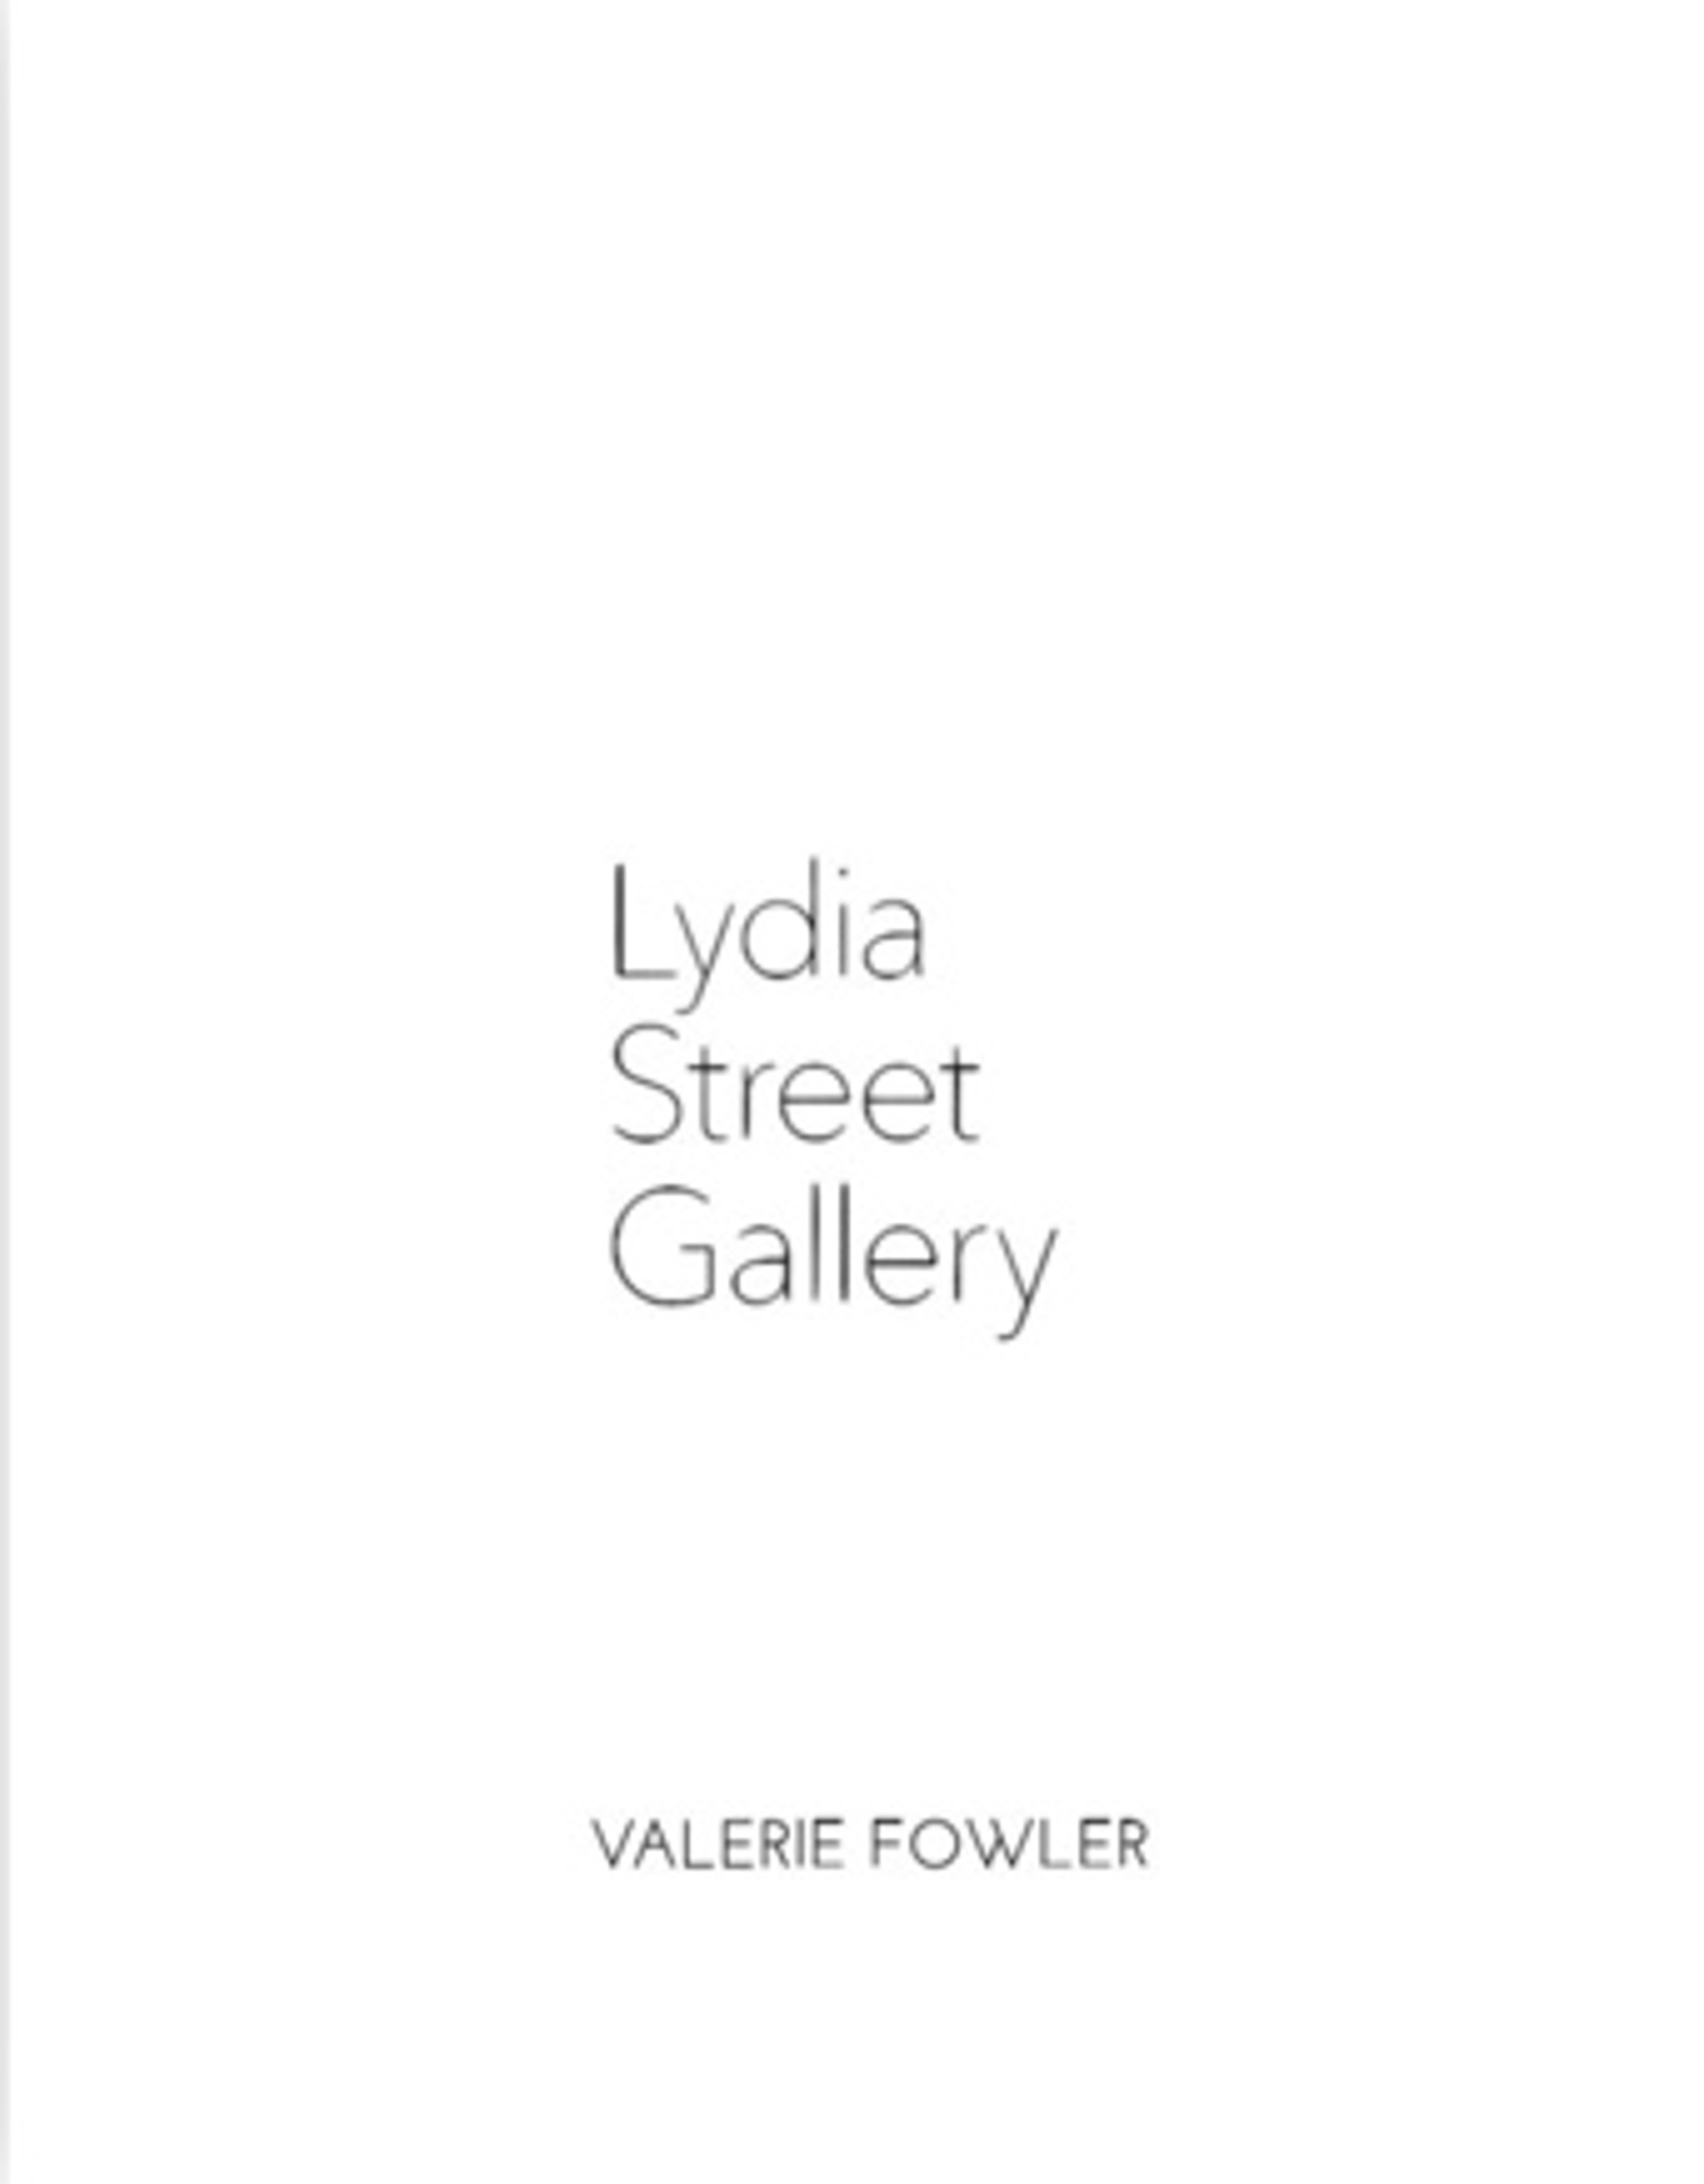 Artist Catalog - Valerie Fowler by Lydia Street Gallery